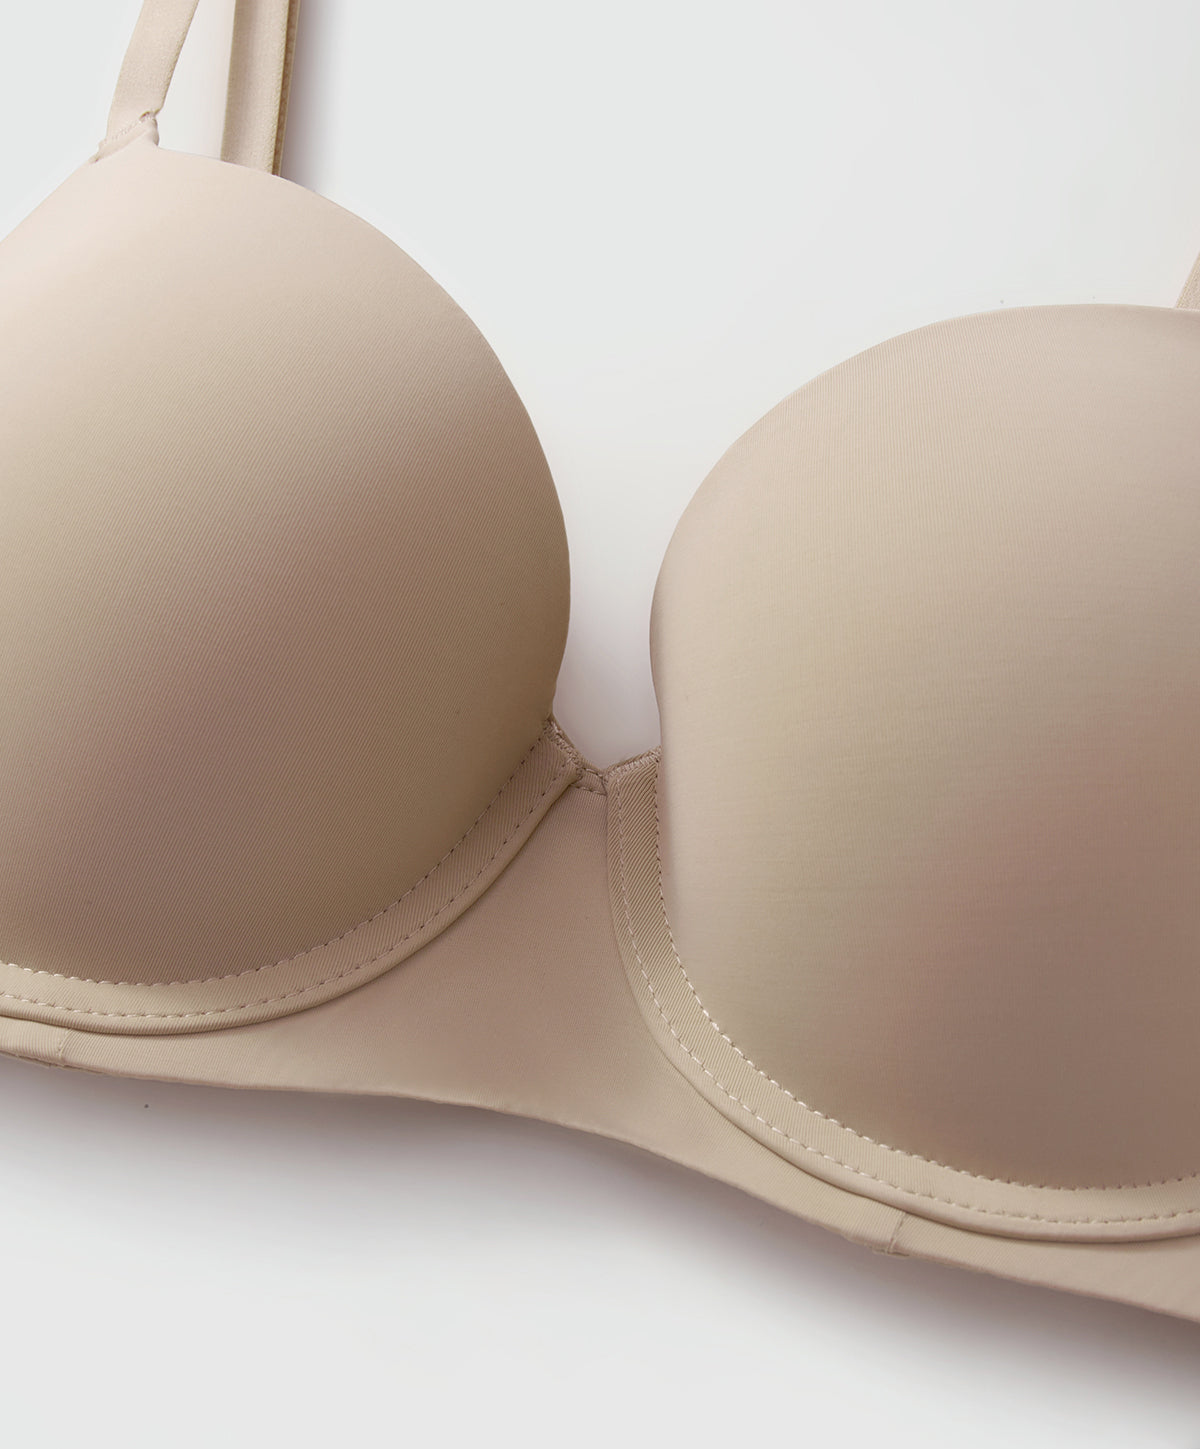 Pierre Cardin seamless push up bra size B75